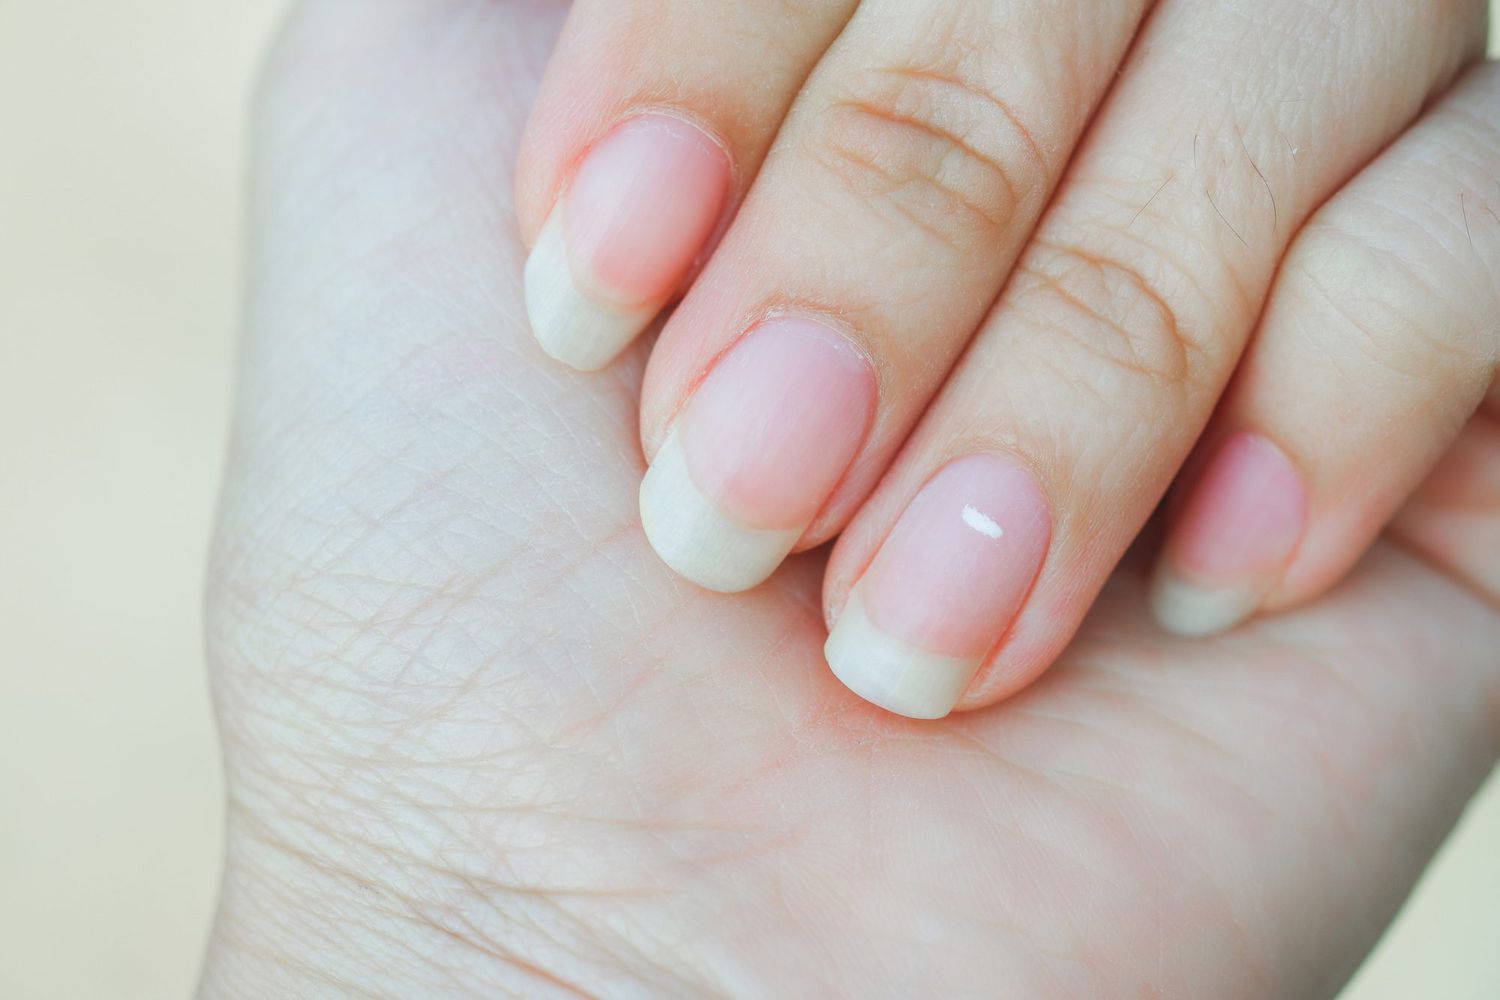 White spots or Leukonychia punctata on a woman's fingernails